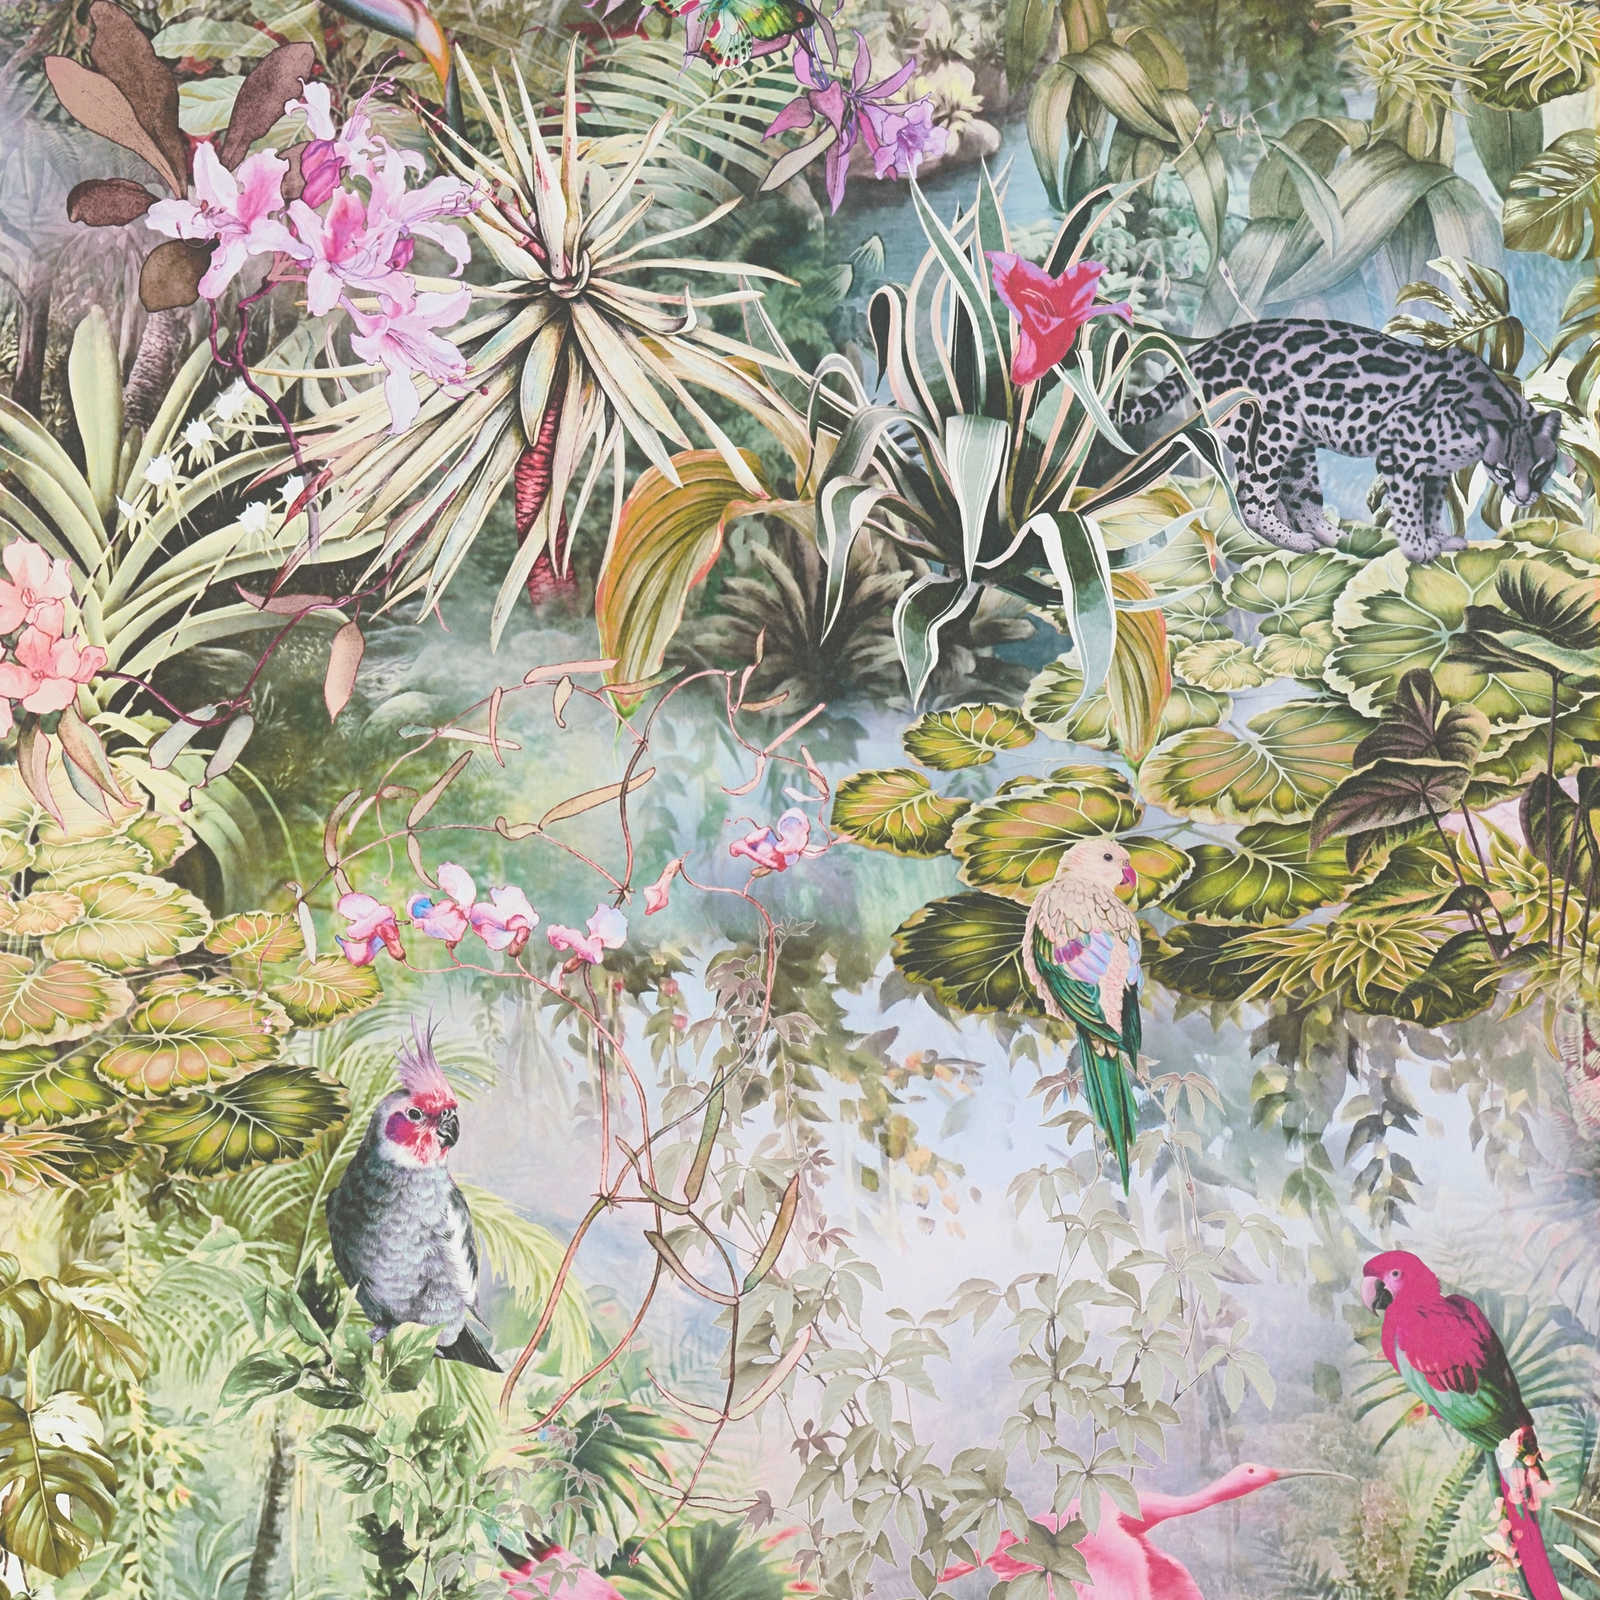             Dschungel Tapete Papagei & Leopard – Grün, Rosa, Grau
        